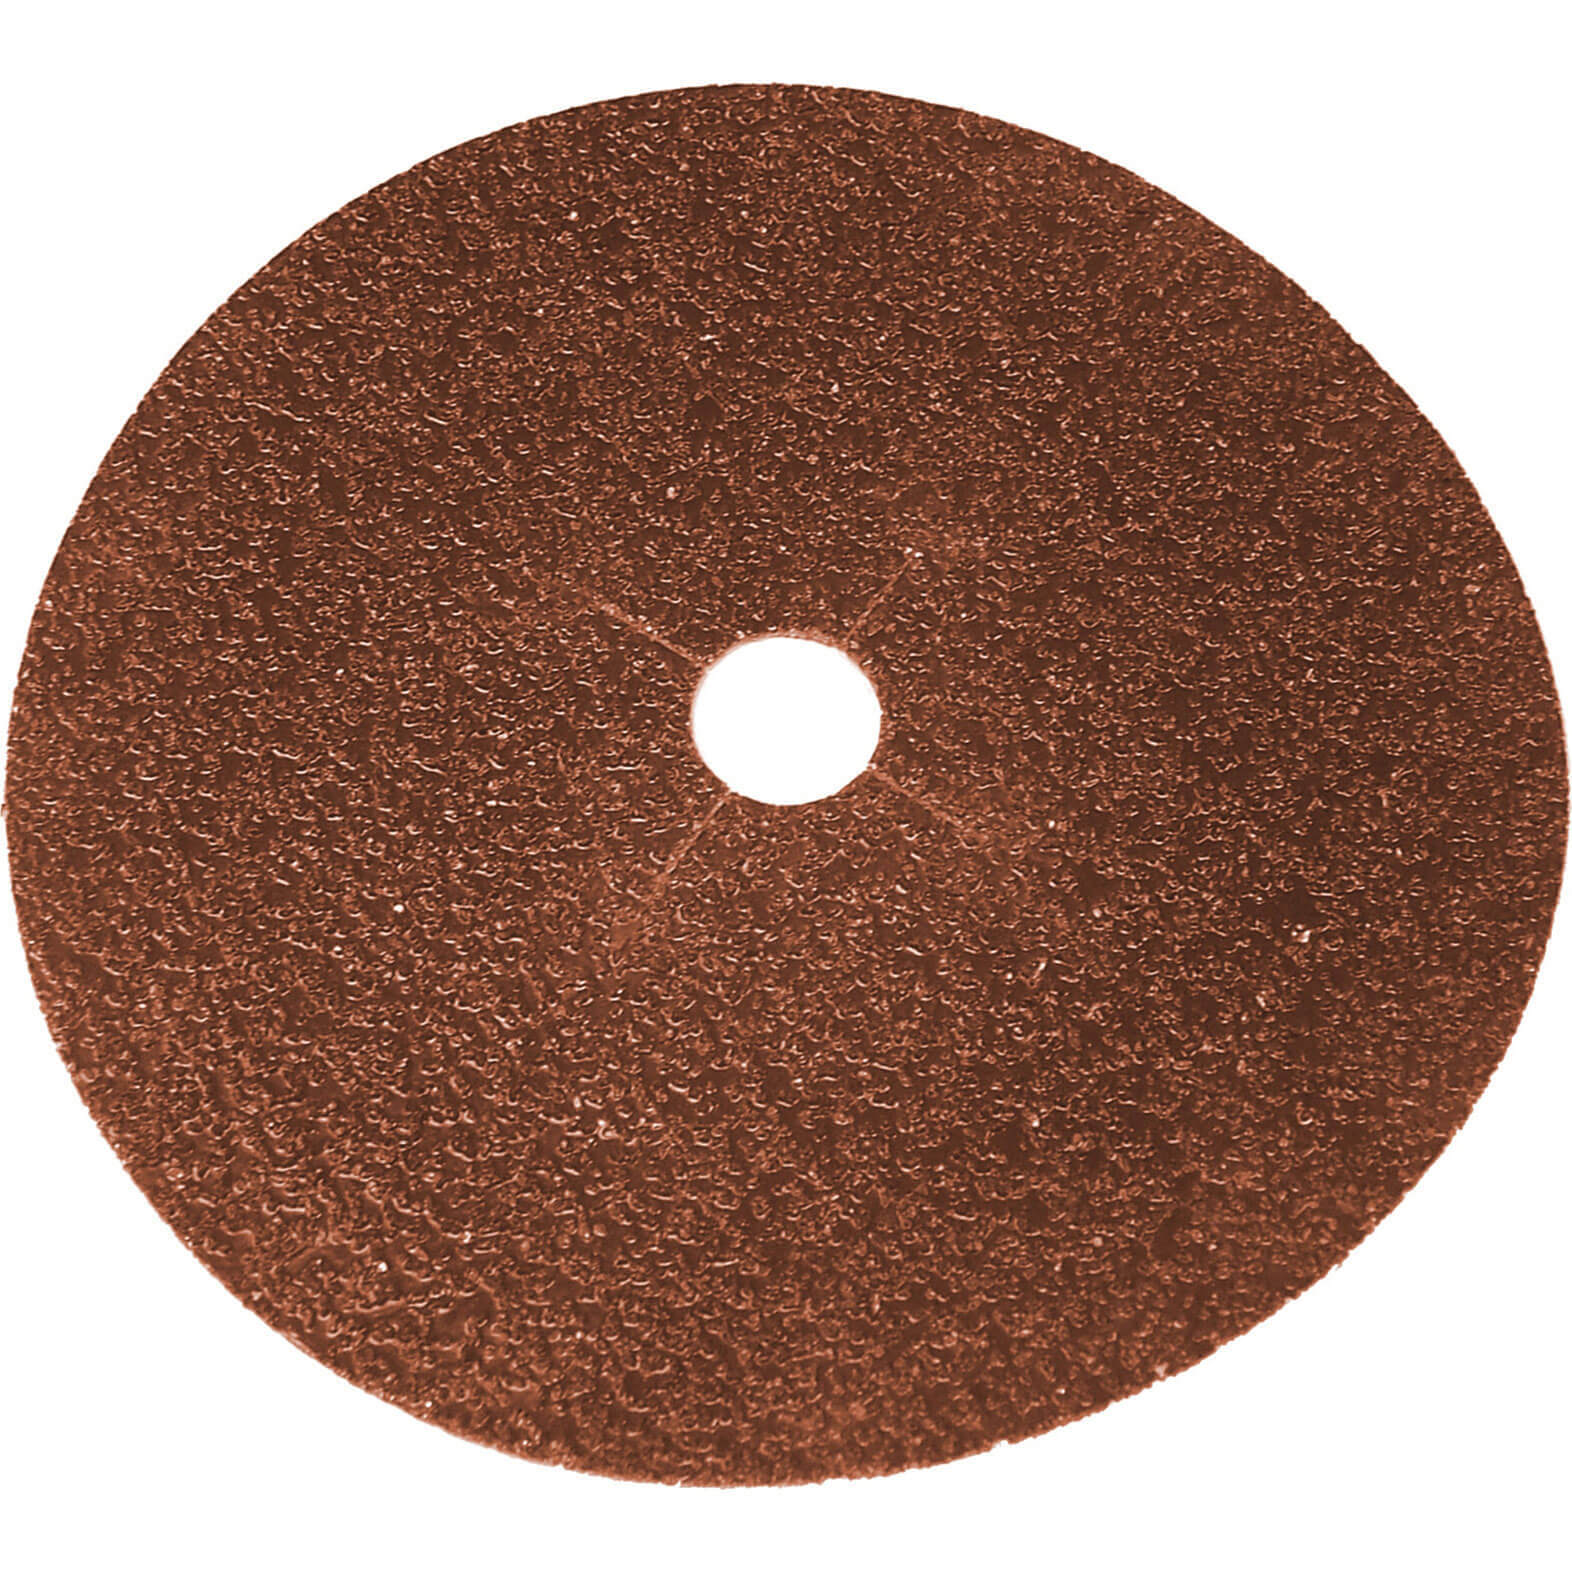 Photo of Faithfull Aluminium Oxide Sanding Discs 178mm 120g